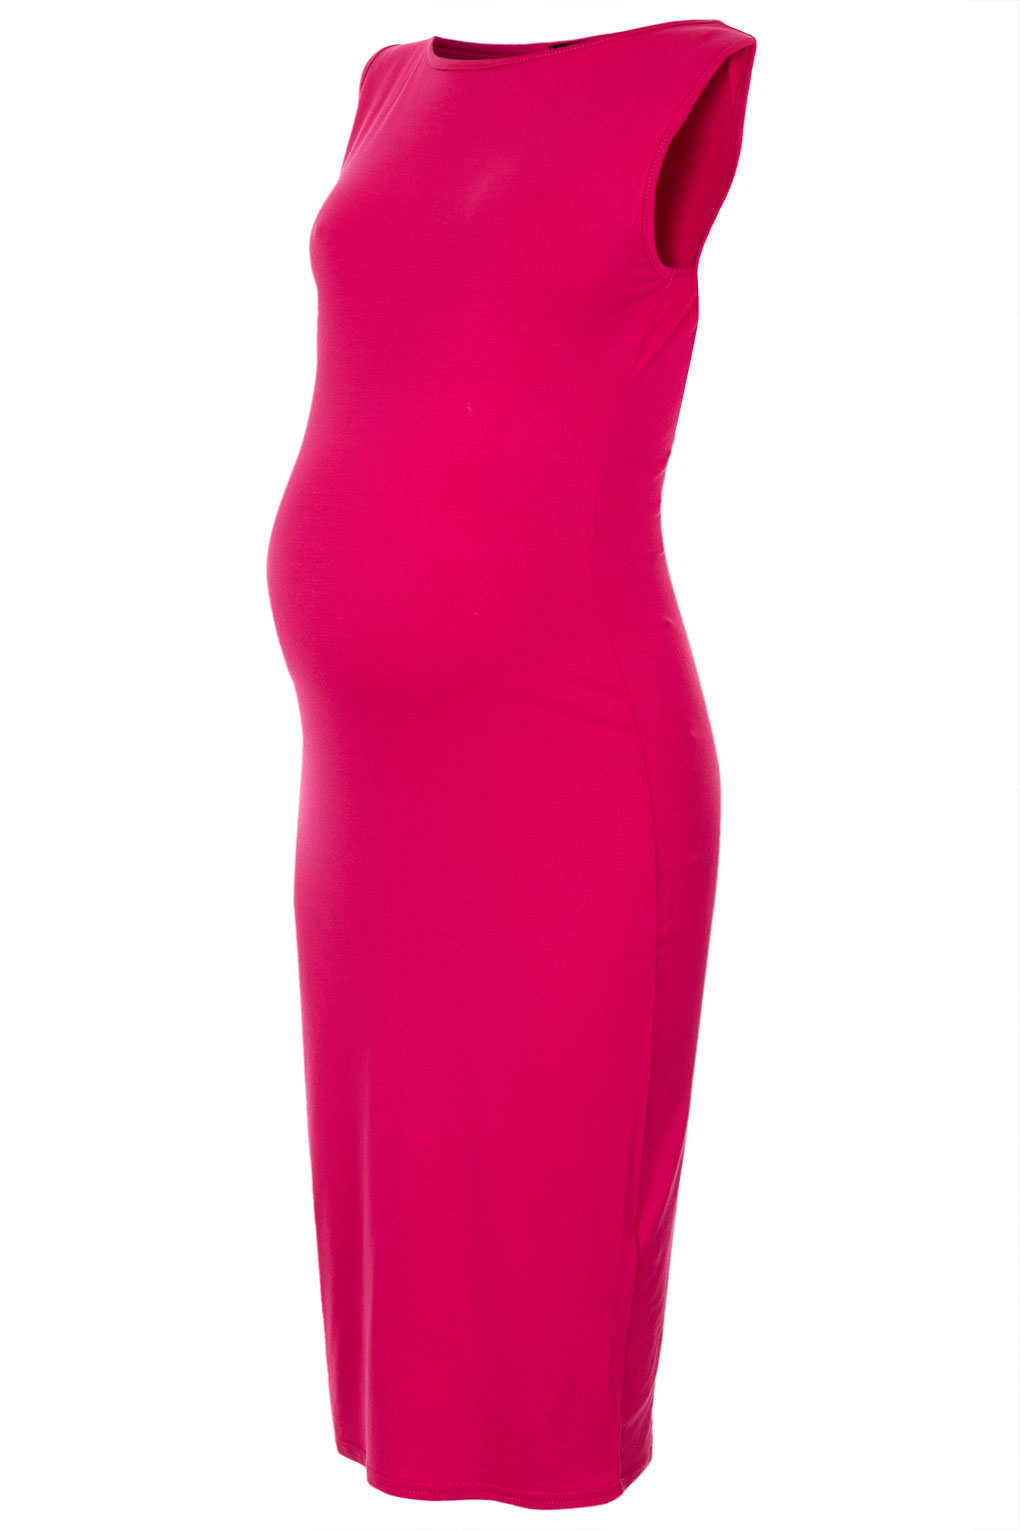 Lyst - Topshop Maternity Sleevless Midi Dress in Pink